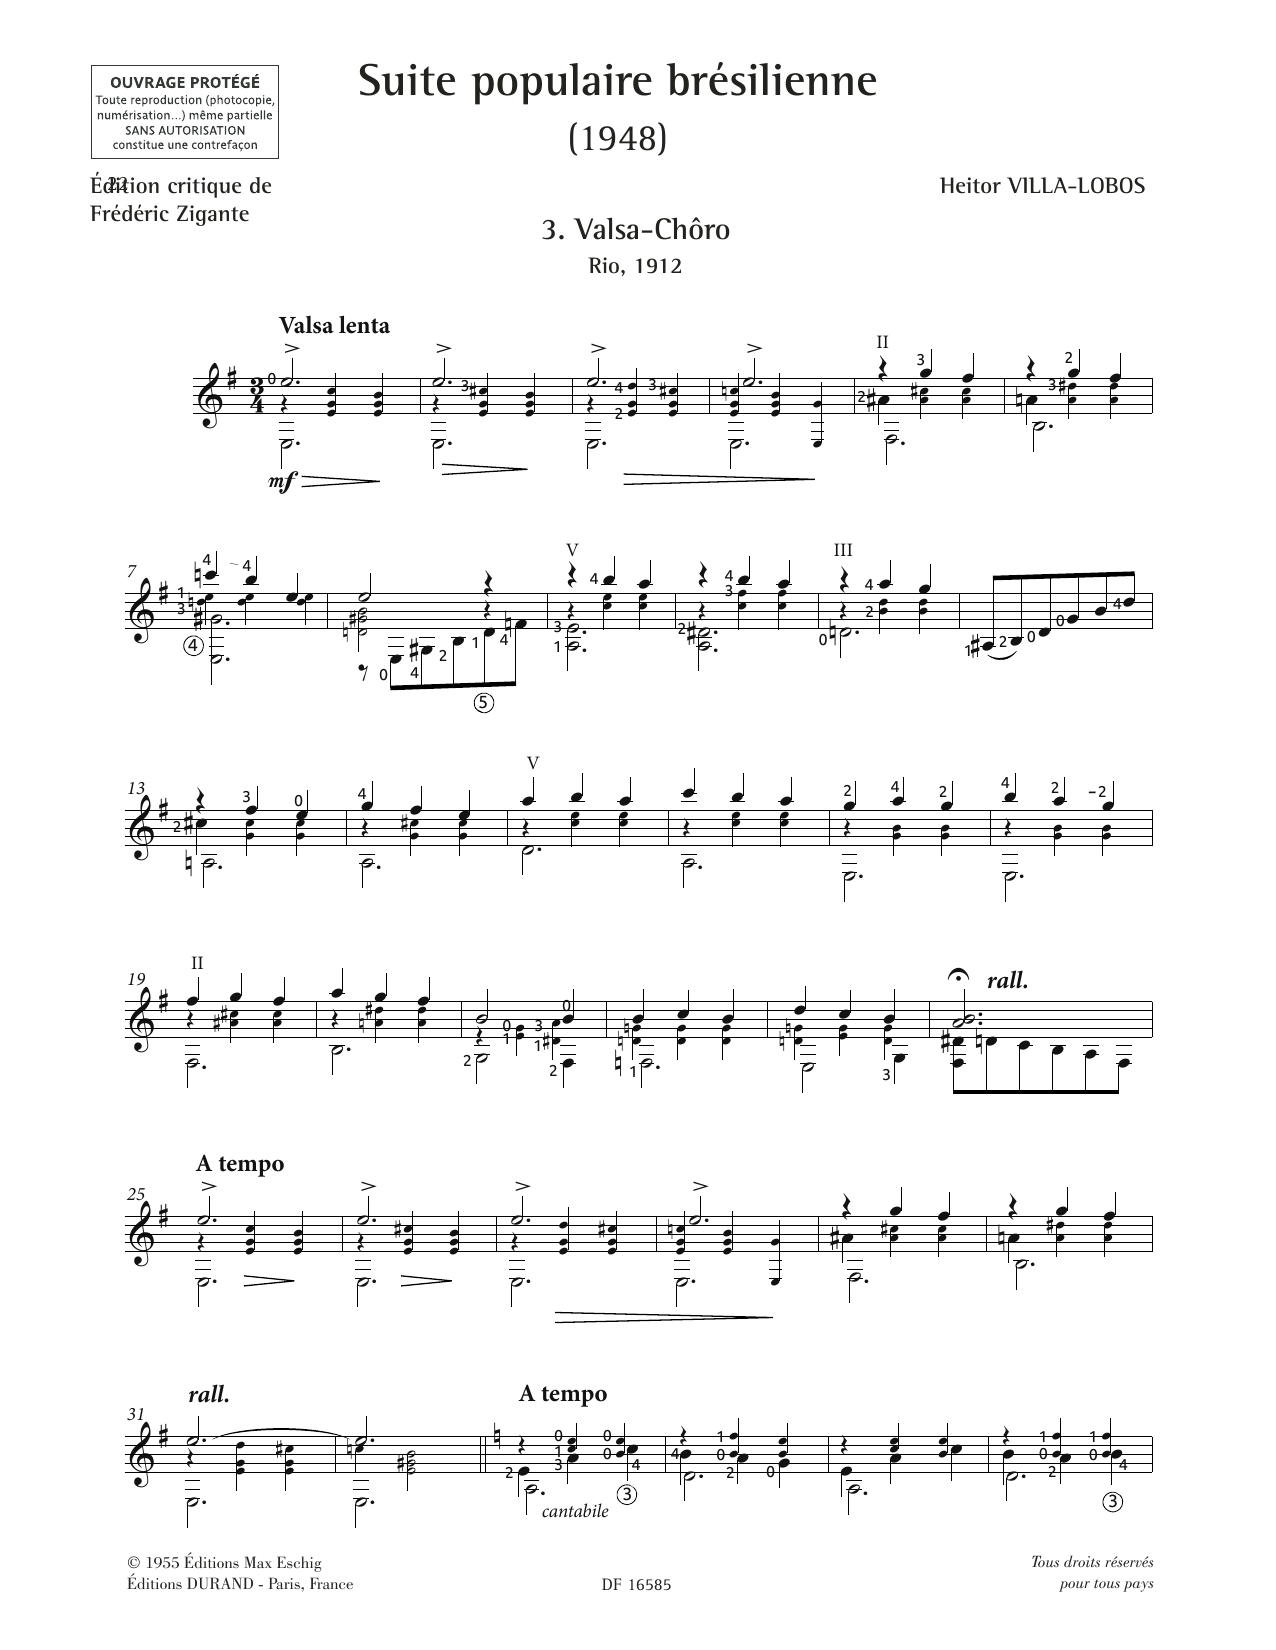 Heitor Villa-Lobos Valsa-Choro Sheet Music Notes & Chords for Solo Guitar - Download or Print PDF